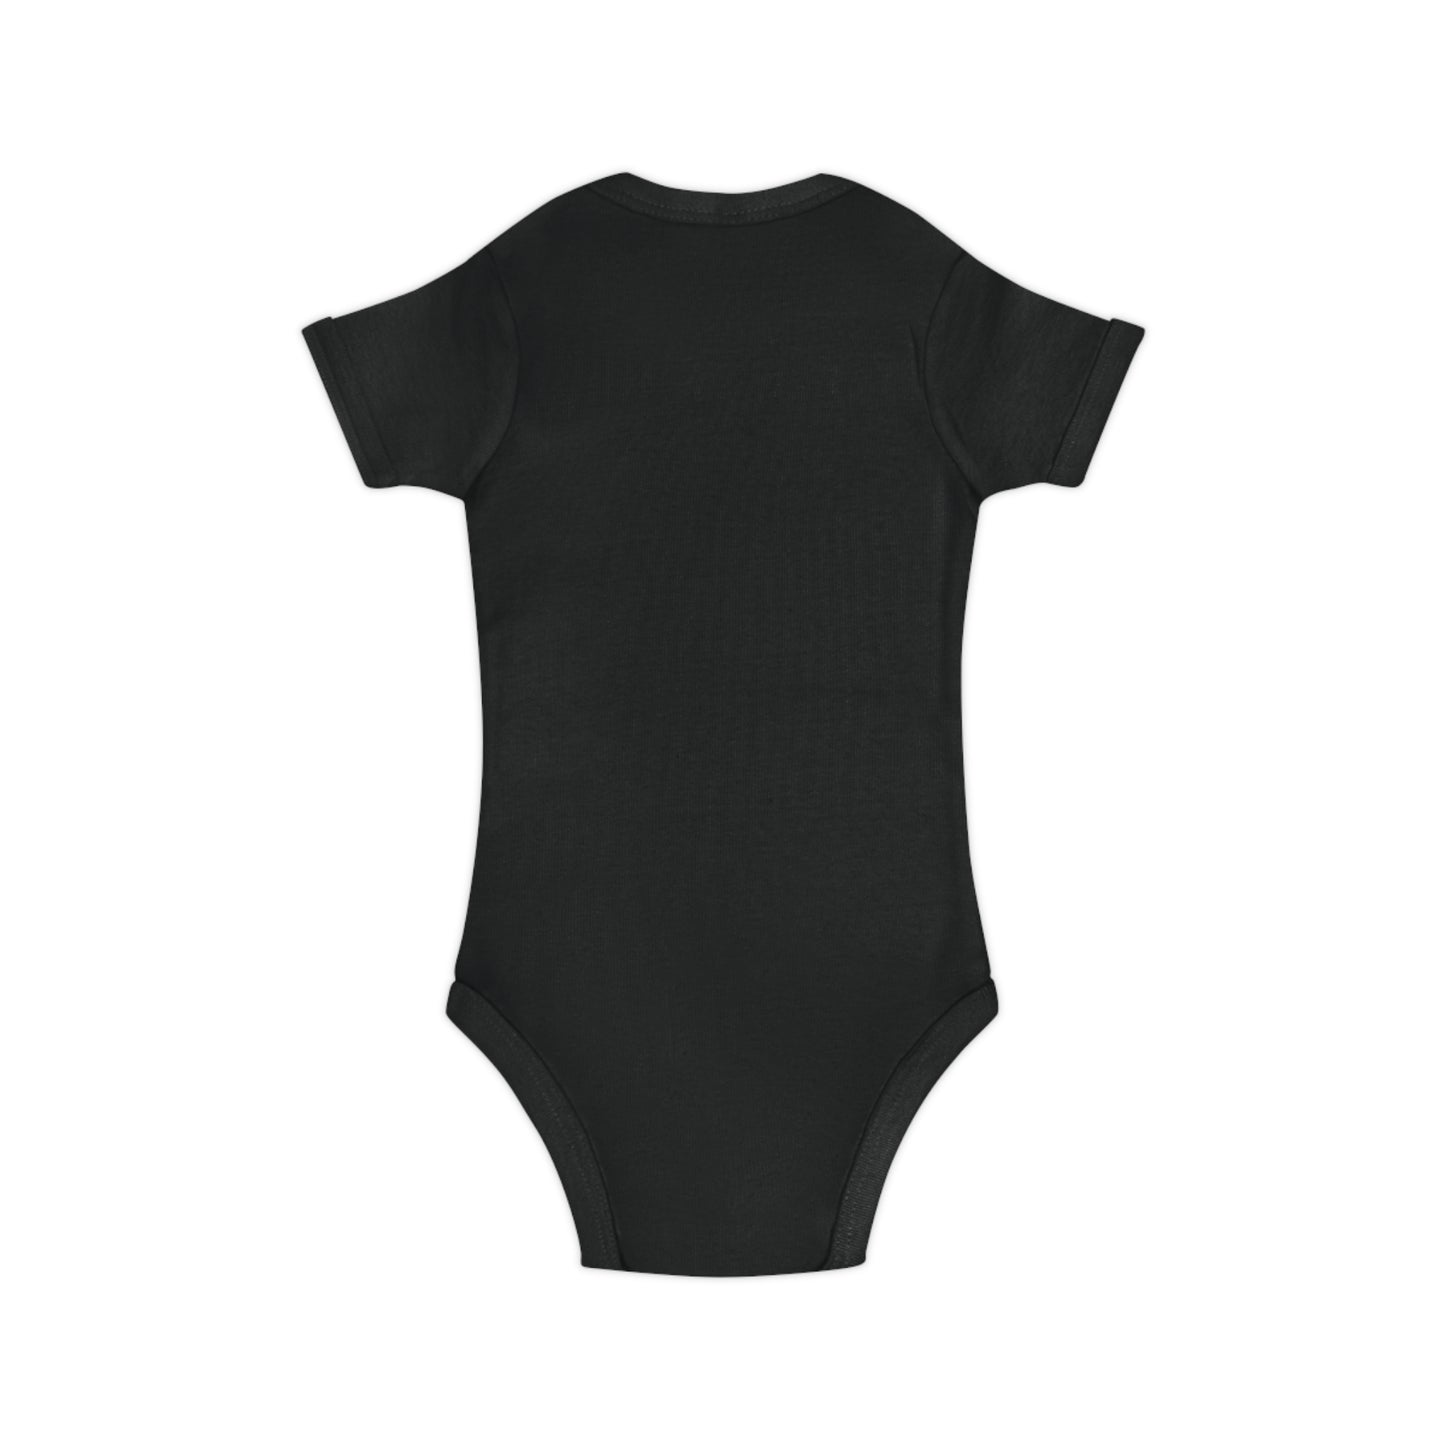 Steelpan Baby Body Suit